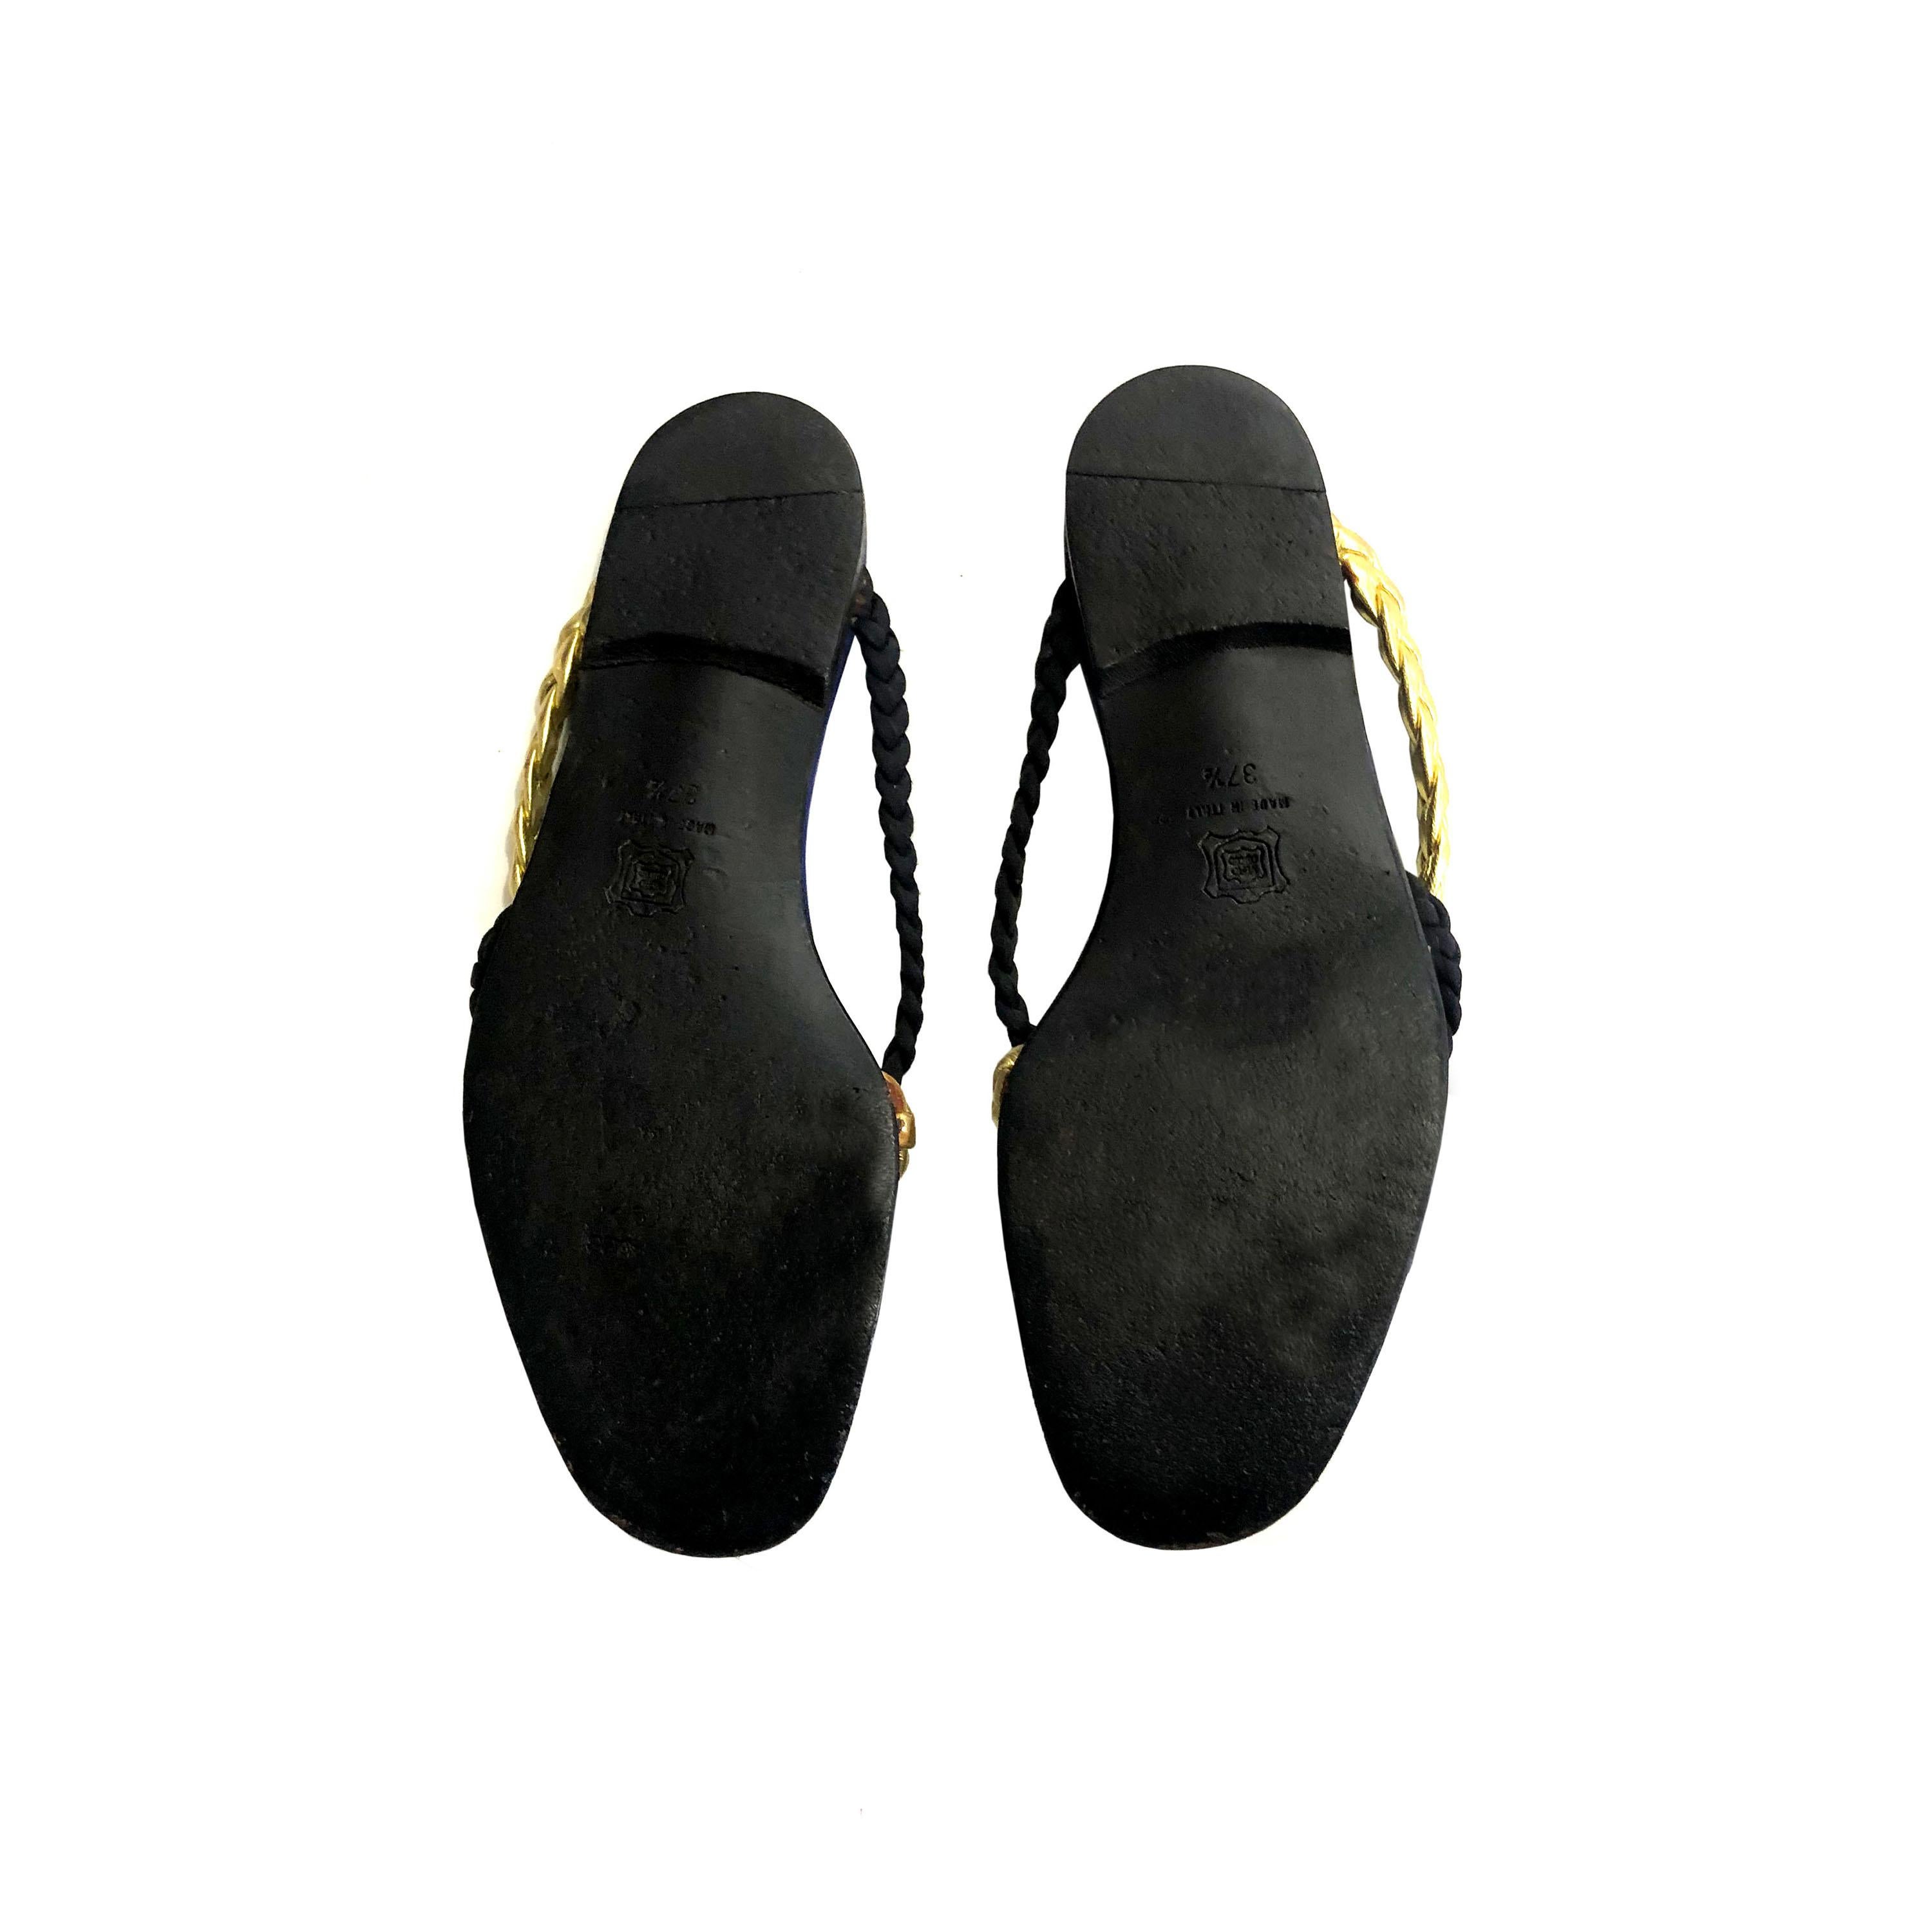 Gianni Versace - 1980s Vintage - Sandals - Gold Leather Plaited Straps - EU 37.5 For Sale 2